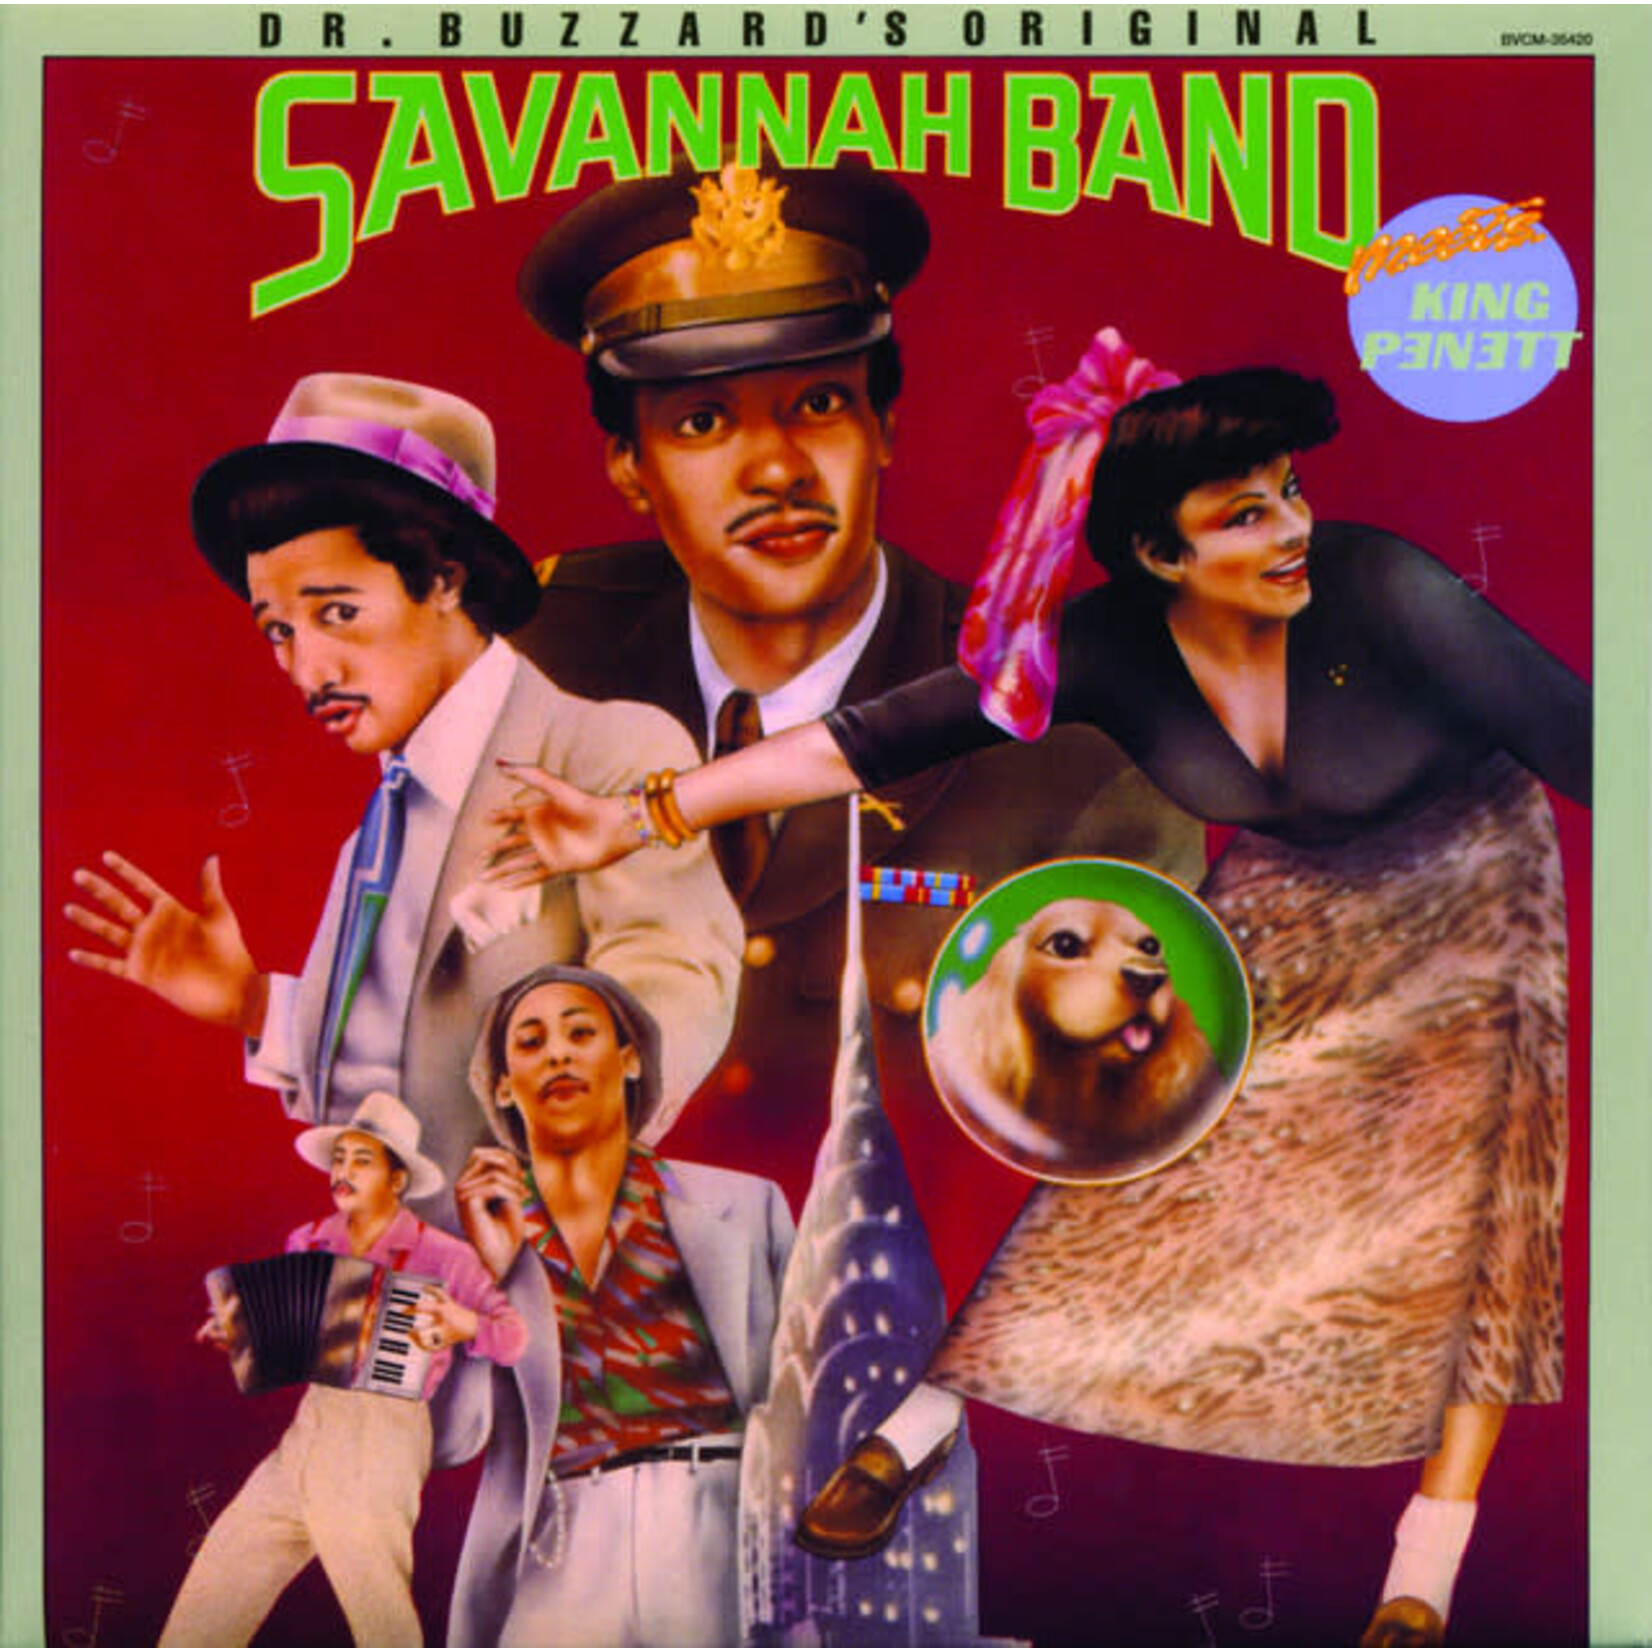 Dr. Buzzard's Original Savannah Band: Meets King Penett [VINTAGE]